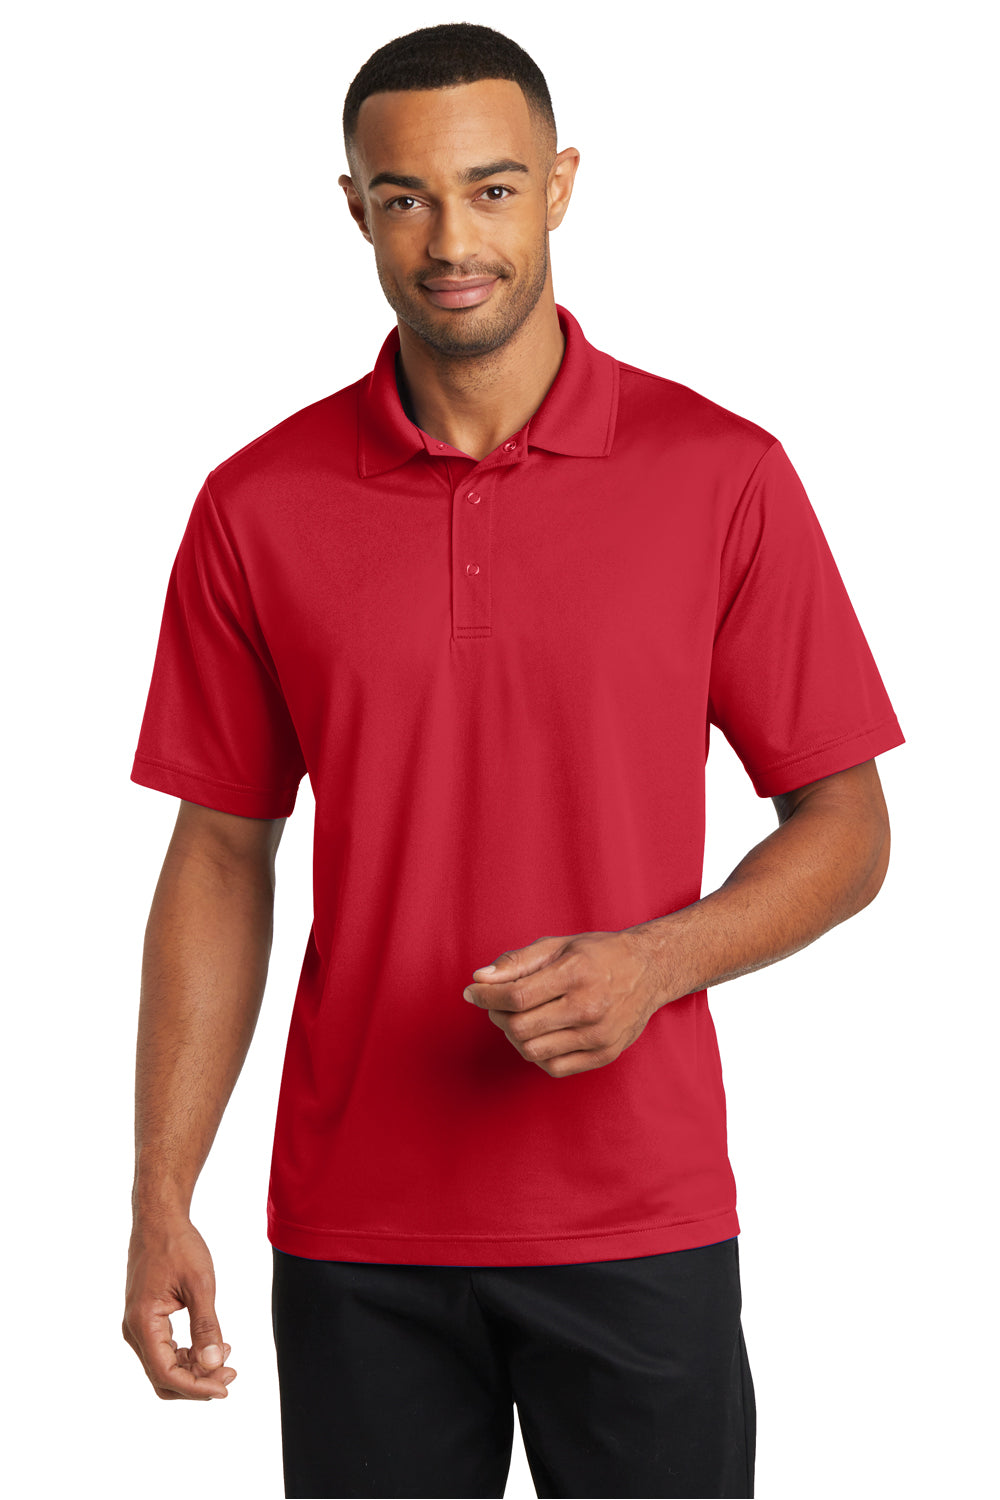 CornerStone CS421 Mens Gripper Moisture Wicking Short Sleeve Polo Shirt Red Front